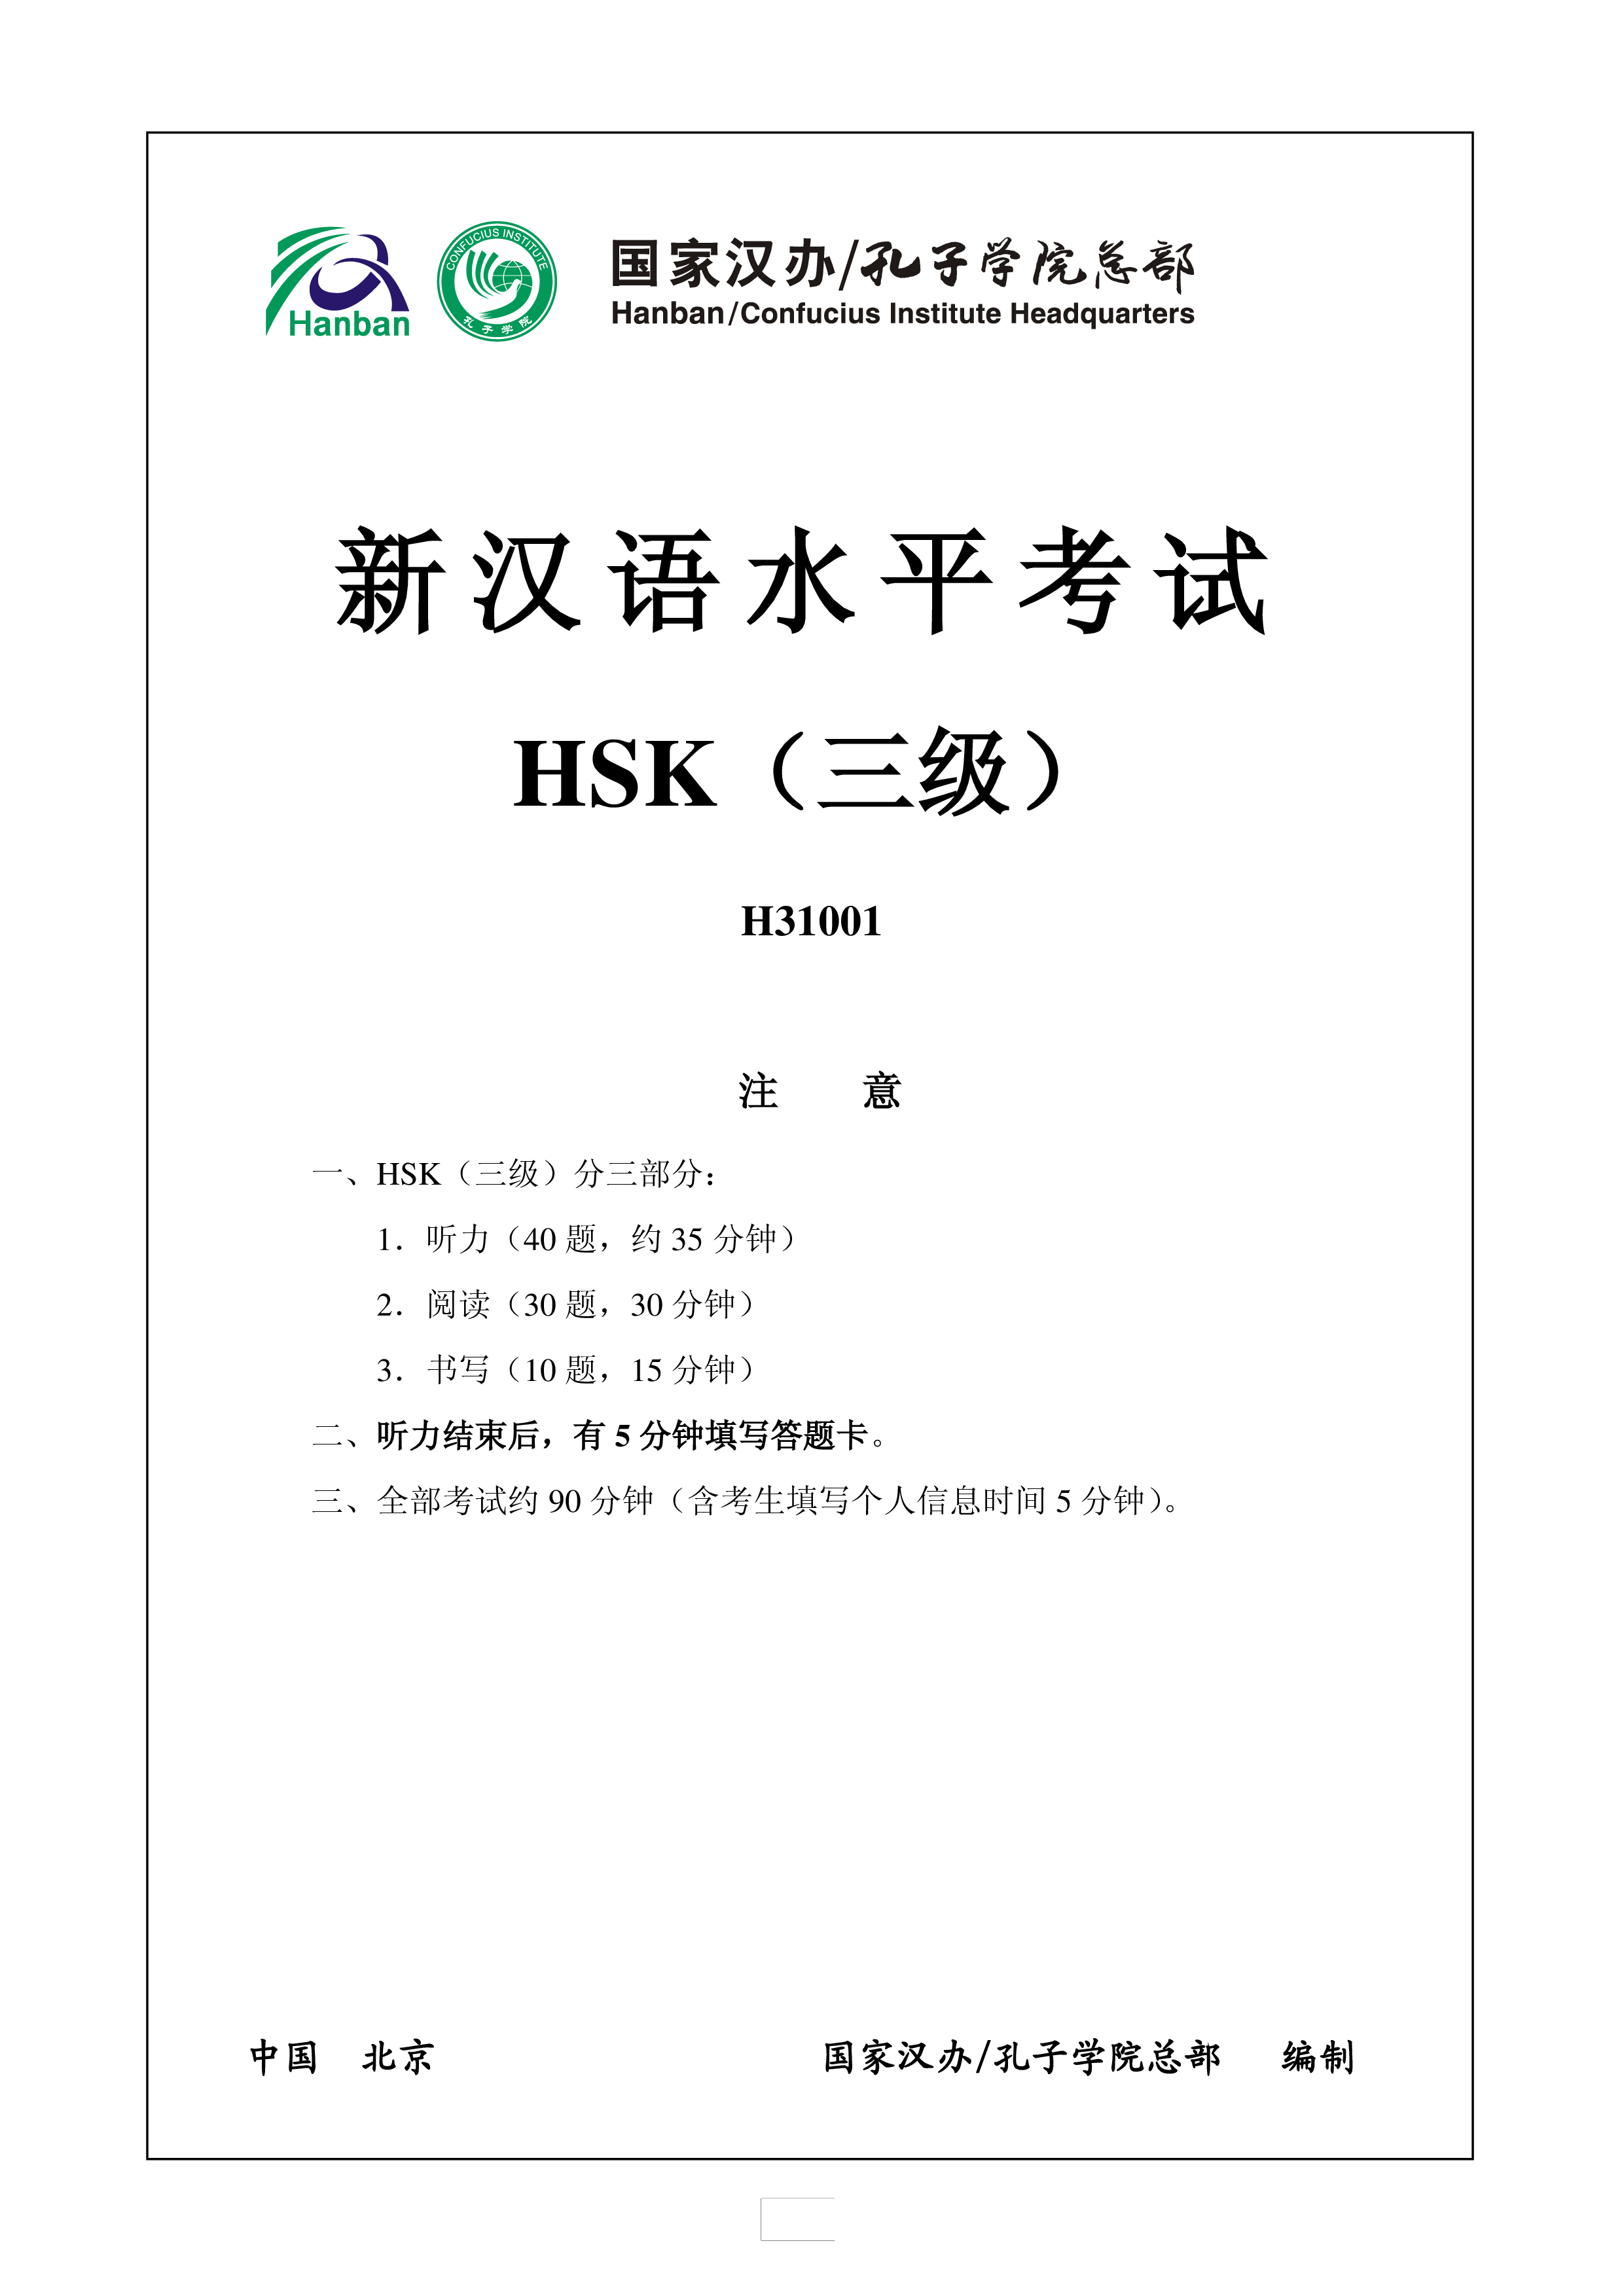 hsk新汉语水平三级考试 h31001模拟真题含答案 plantilla imagen principal